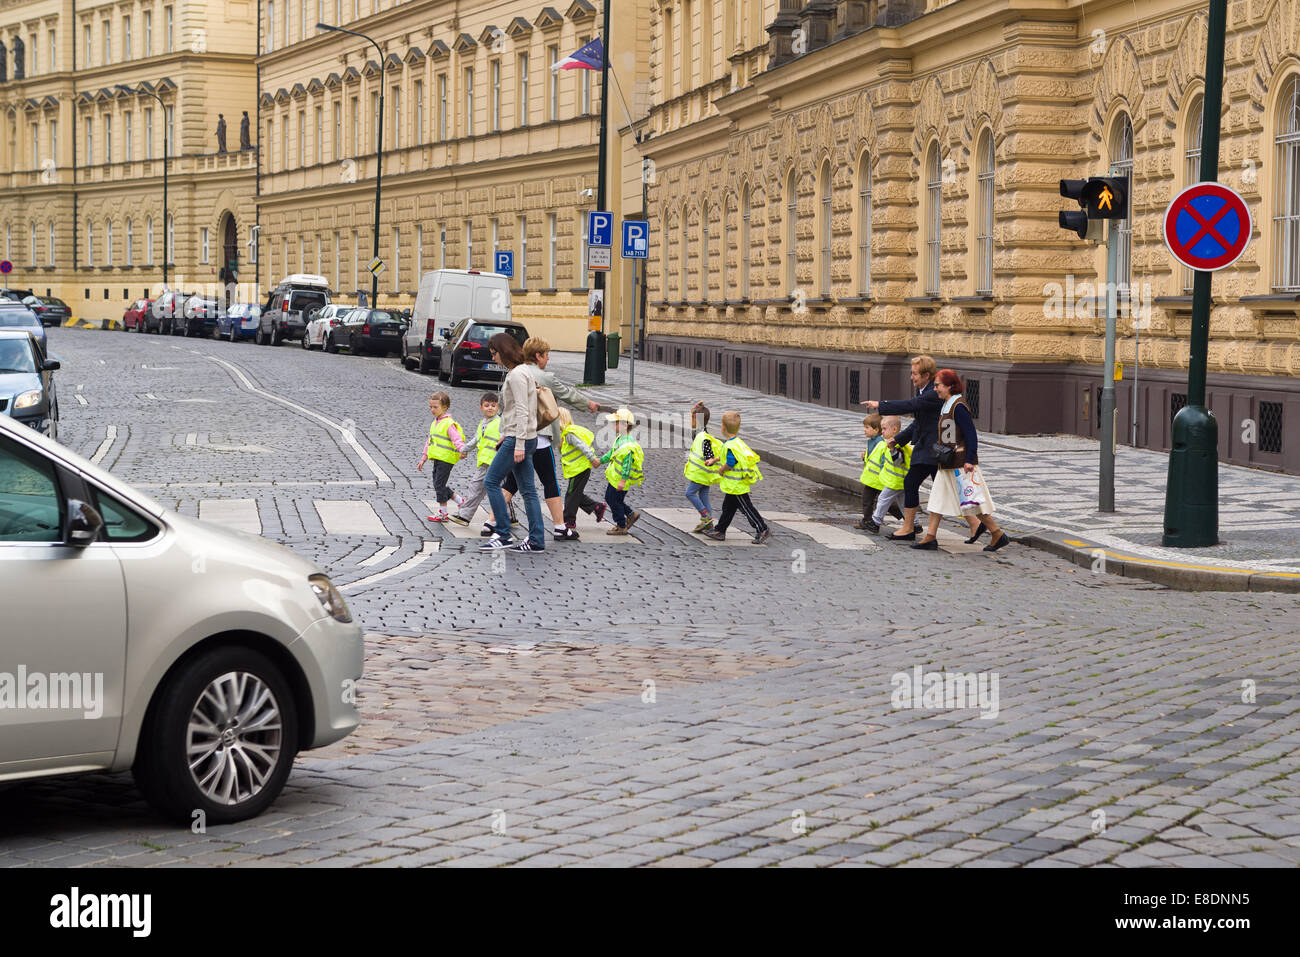 PRAGUE, CZECH REPUBLIC - SEPTEMBER 06, 2014: Kindergarden children wearing yellow safety vests while crossing the street in Prag Stock Photo